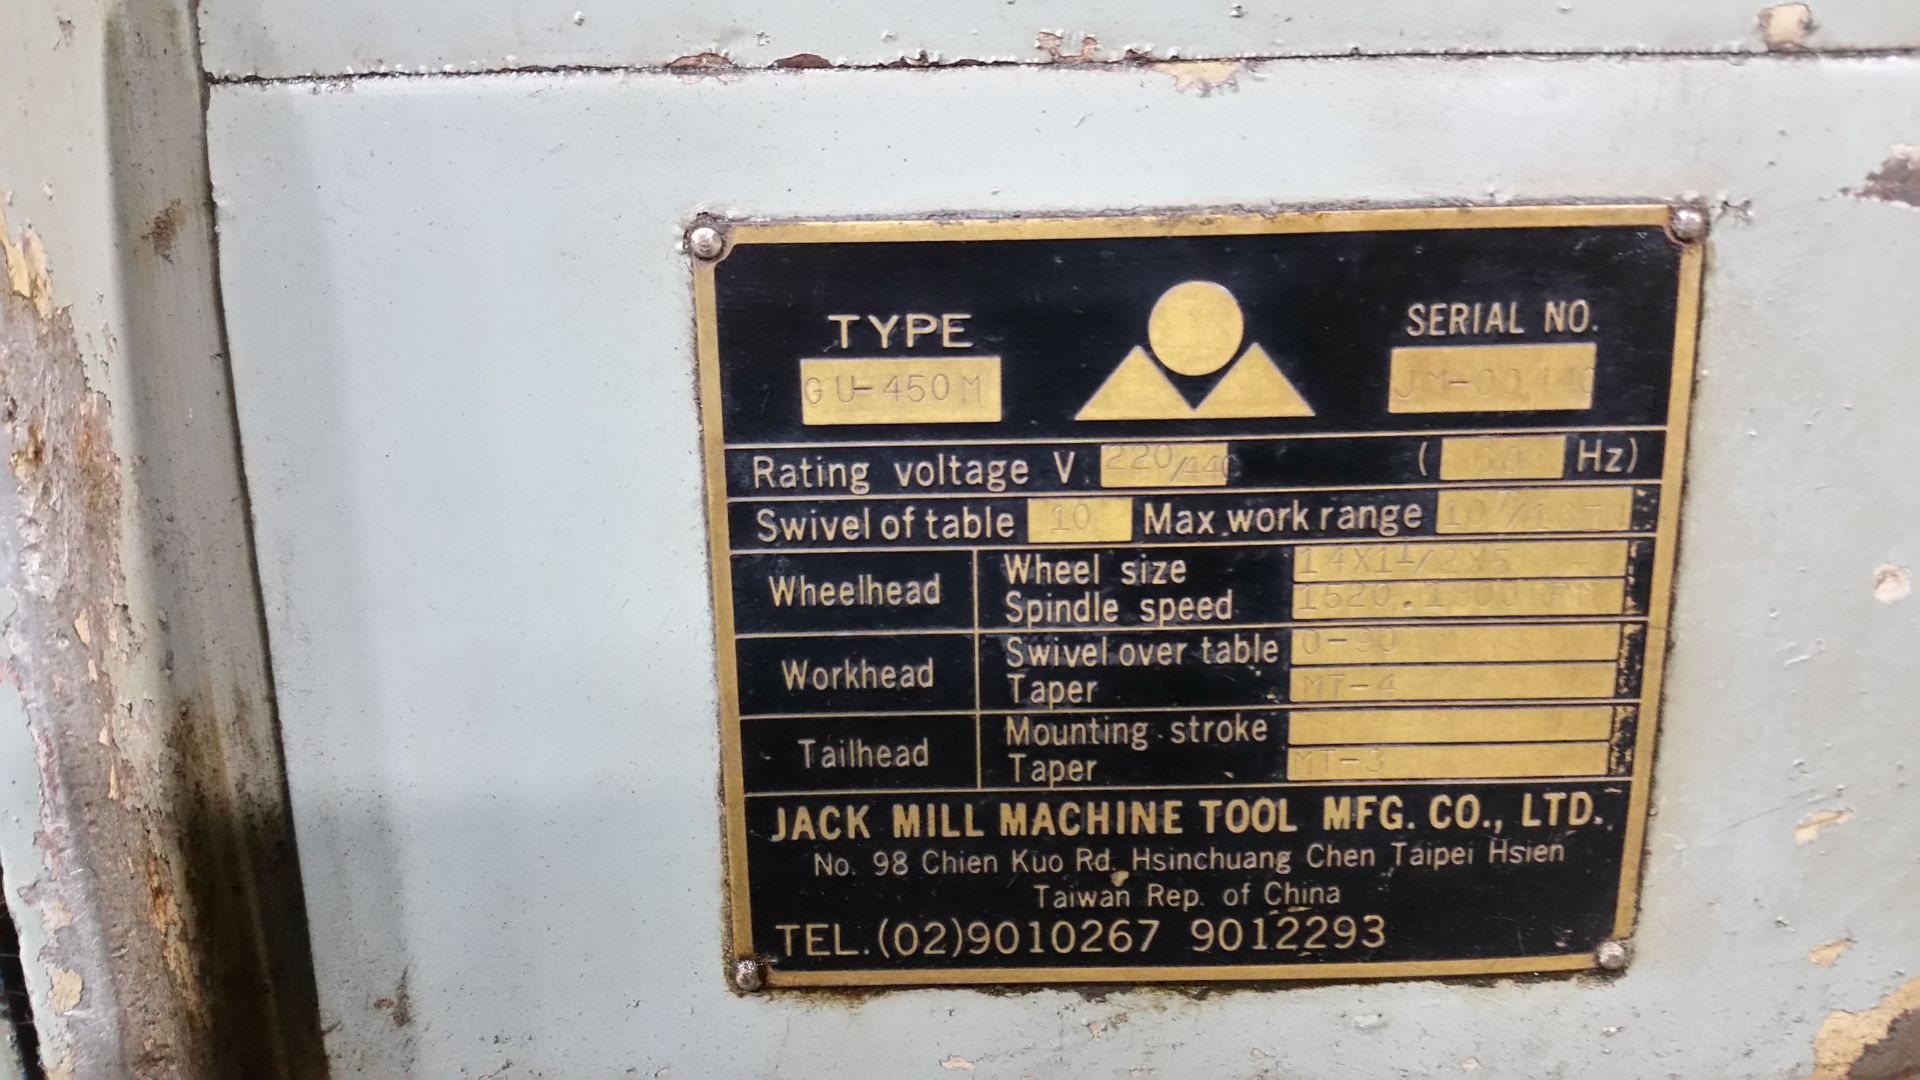 JACK MILL MACHINE TOOL MFG. CO., LTD MODEL GU-450M CYLINDRICAL GRINDER - Image 5 of 7